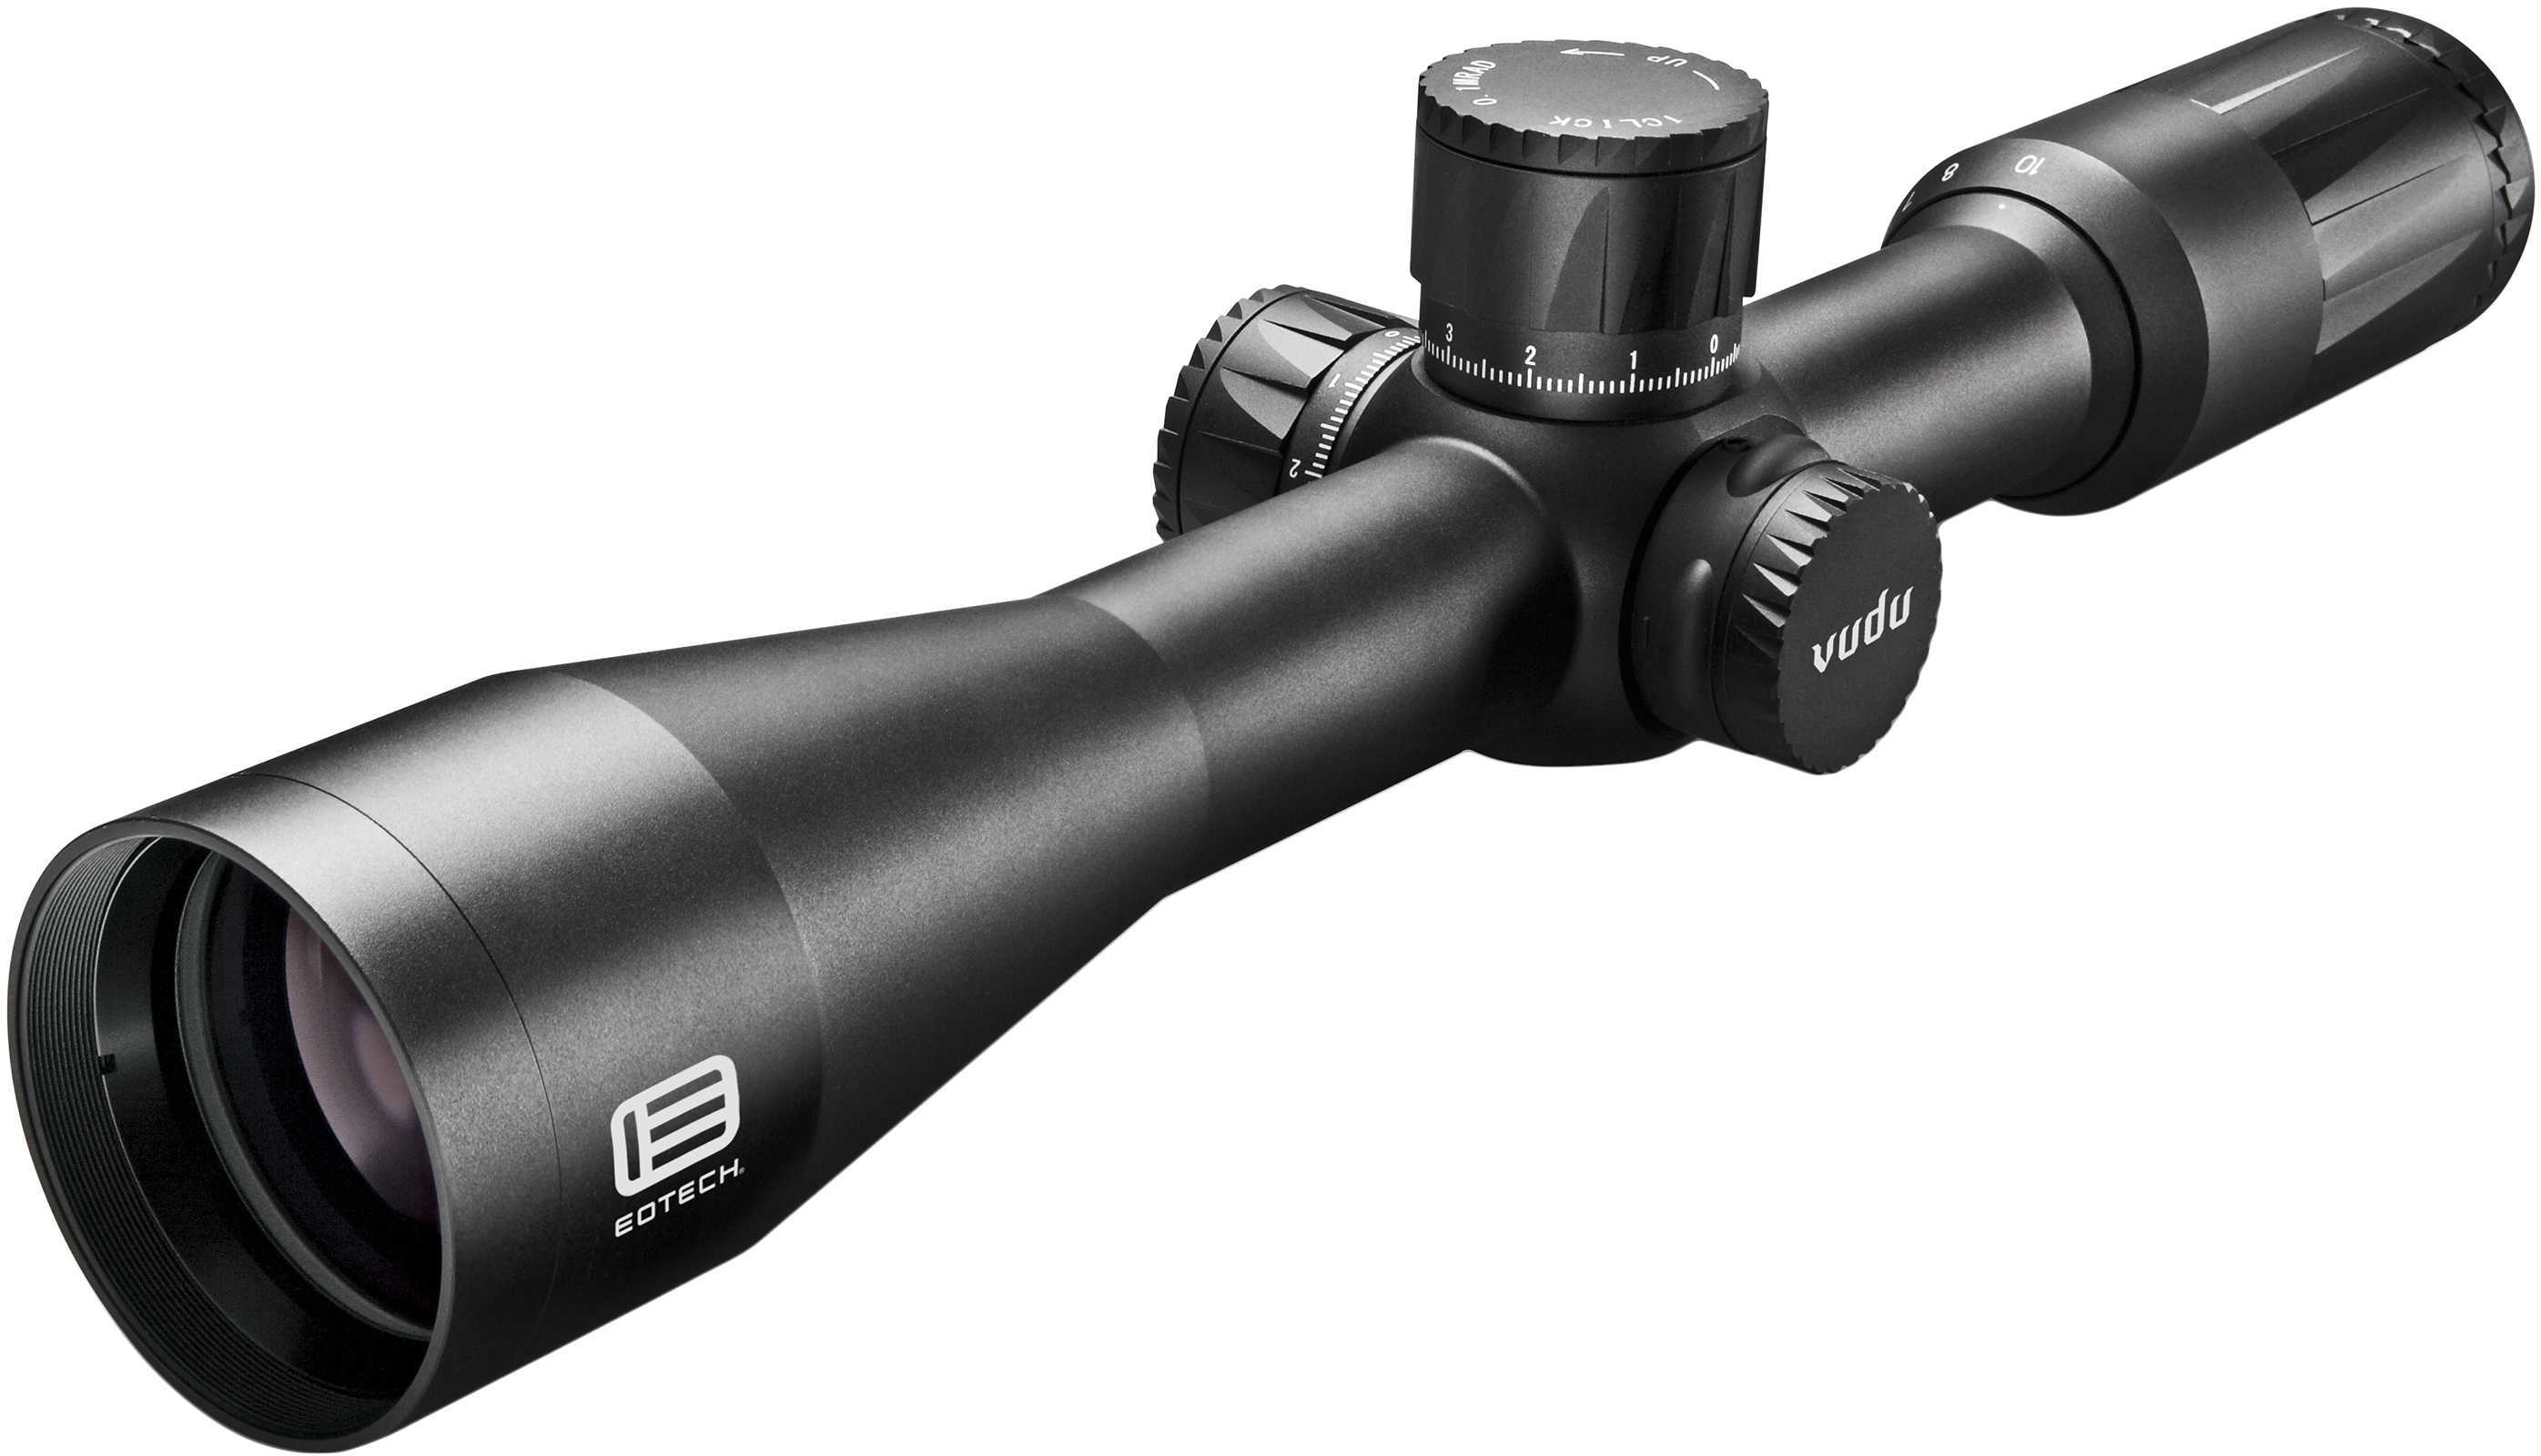 EOTECH VUDU 2.5-10X44 Ff Riflescope Md1 Reticle